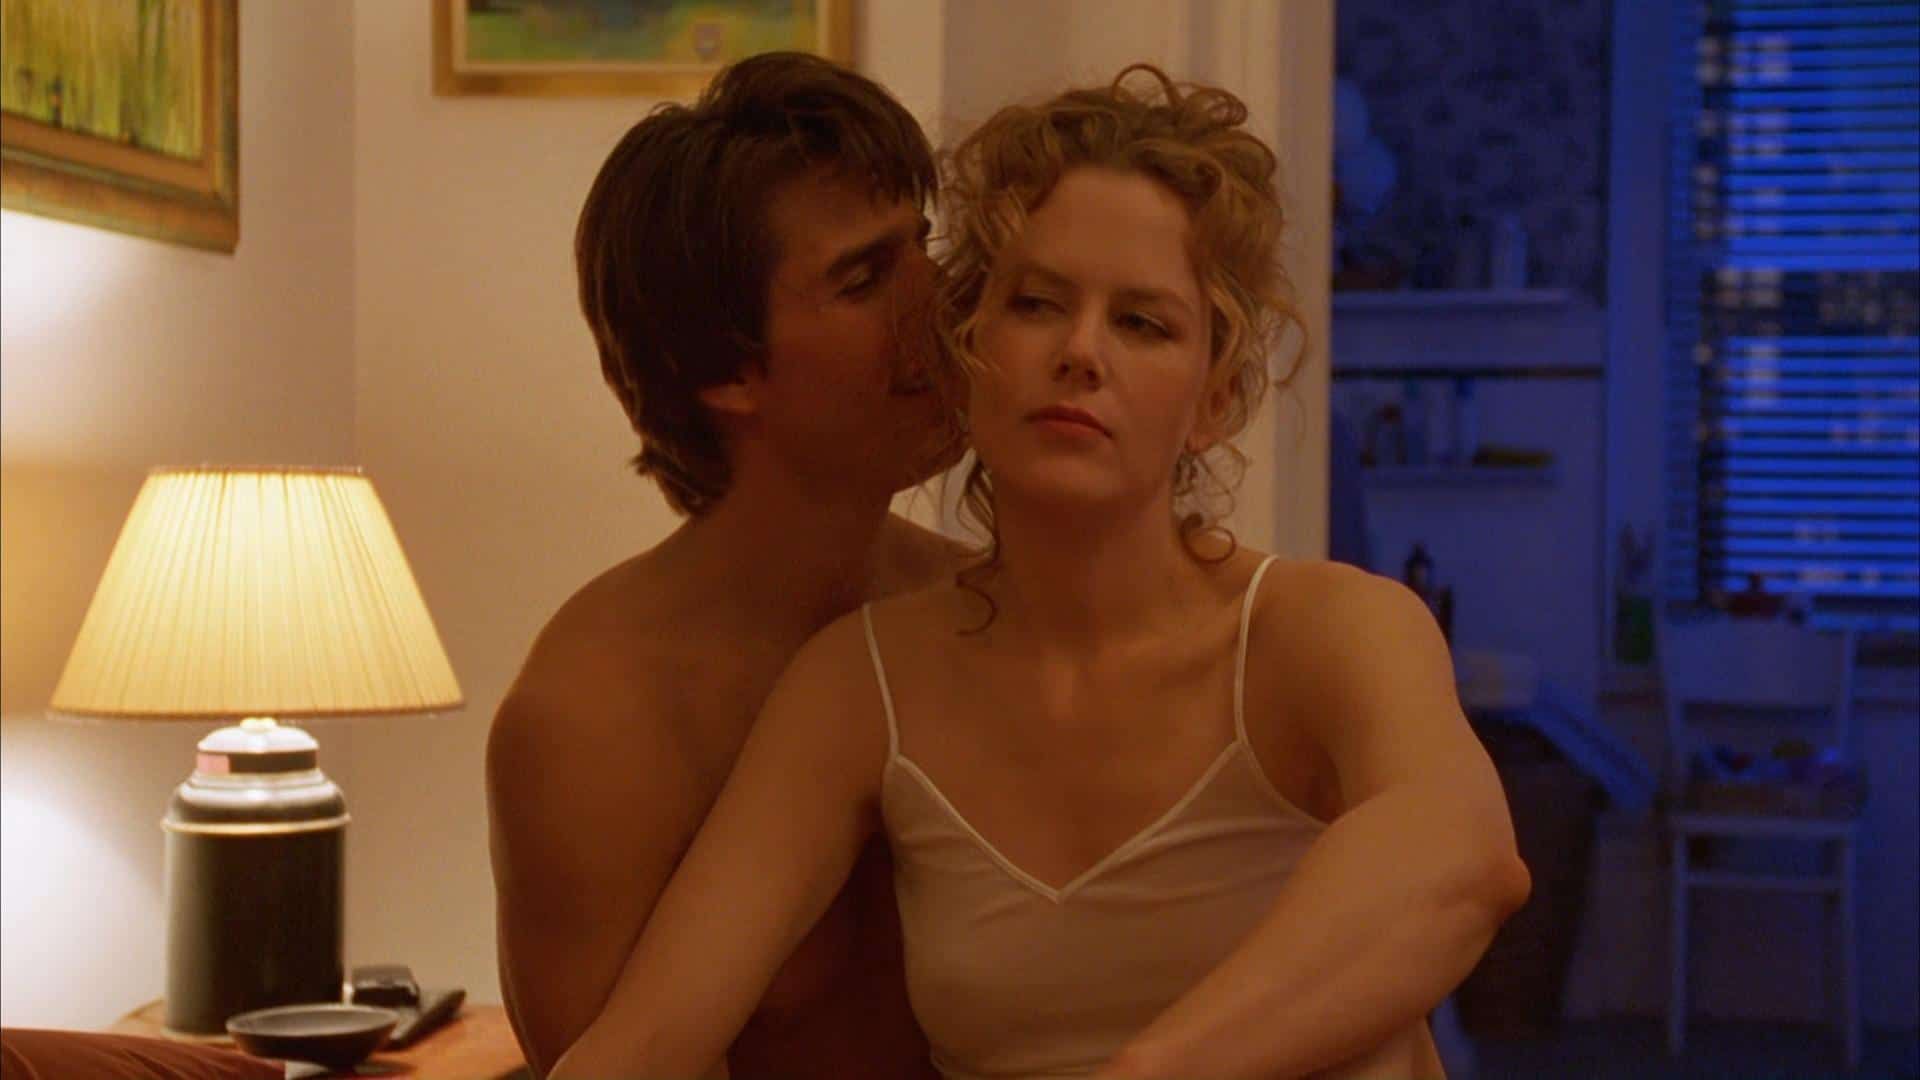 Tom Cruise and Nicole Kidman star in Eyes Wide Shut